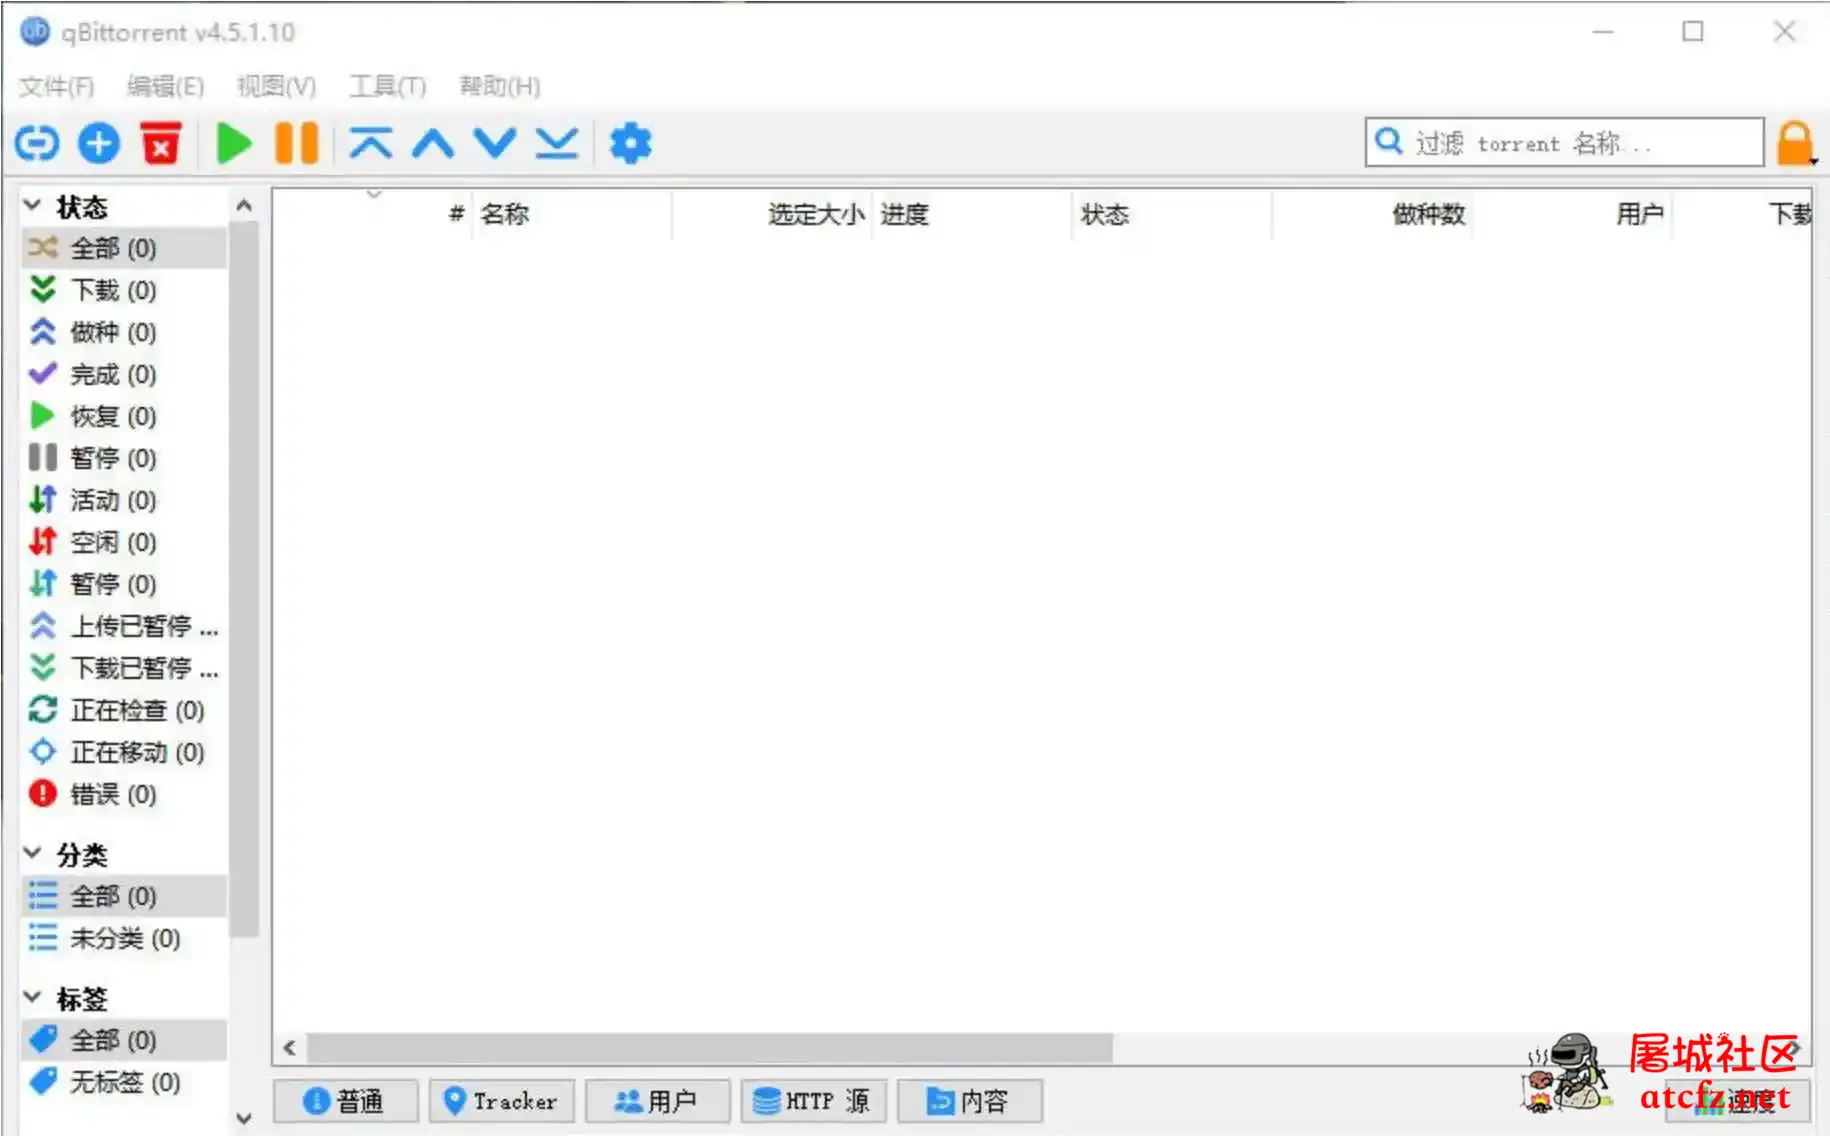 qBittorrent v4.5.3.10增强便携版BT种子下载工具 屠城辅助网www.tcfz1.com5281